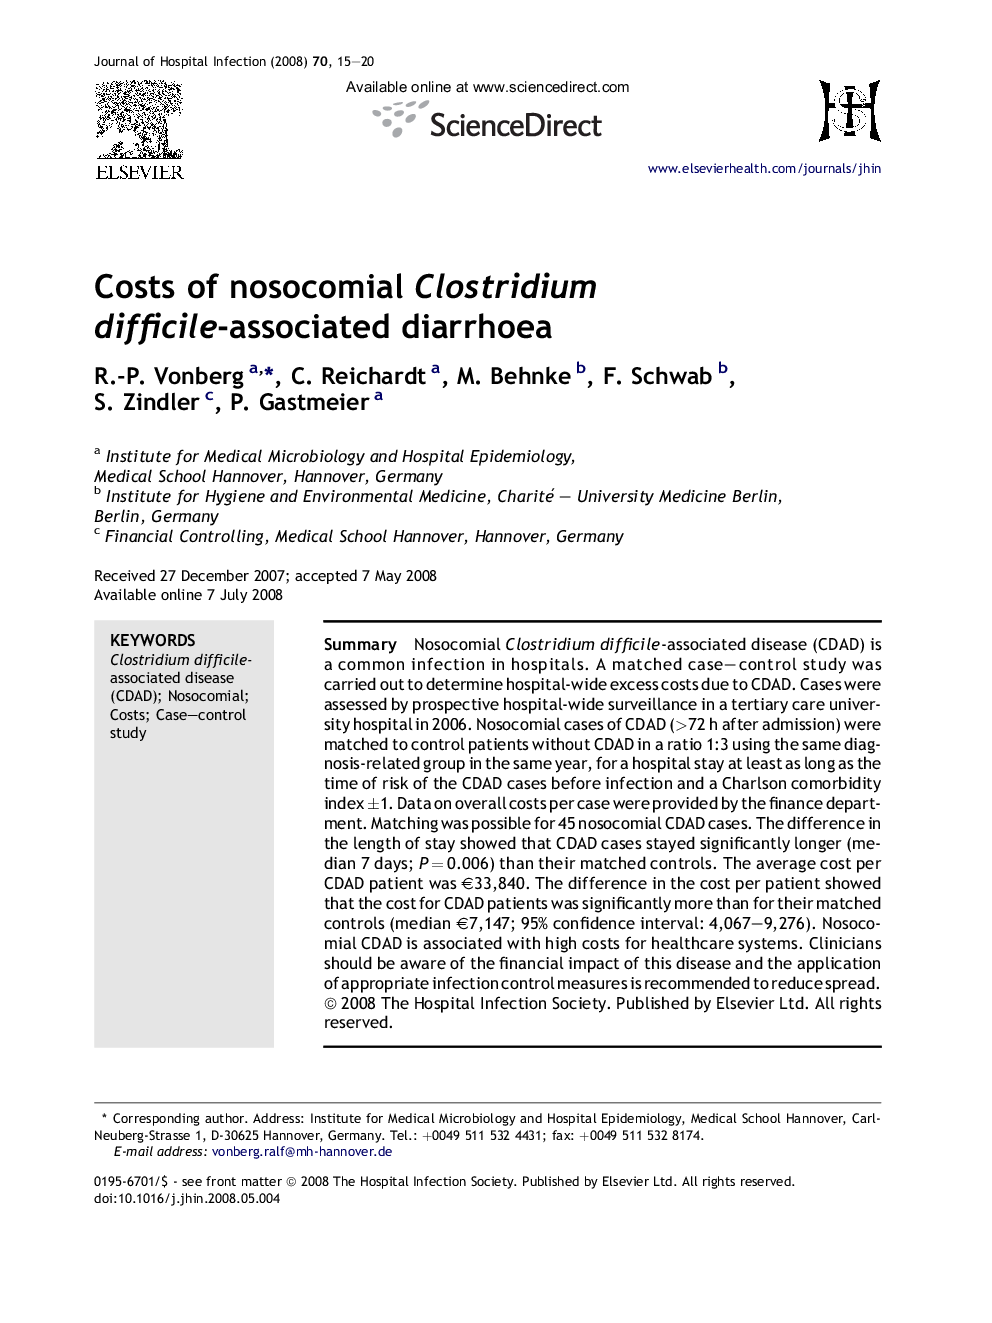 Costs of nosocomial Clostridium difficile-associated diarrhoea